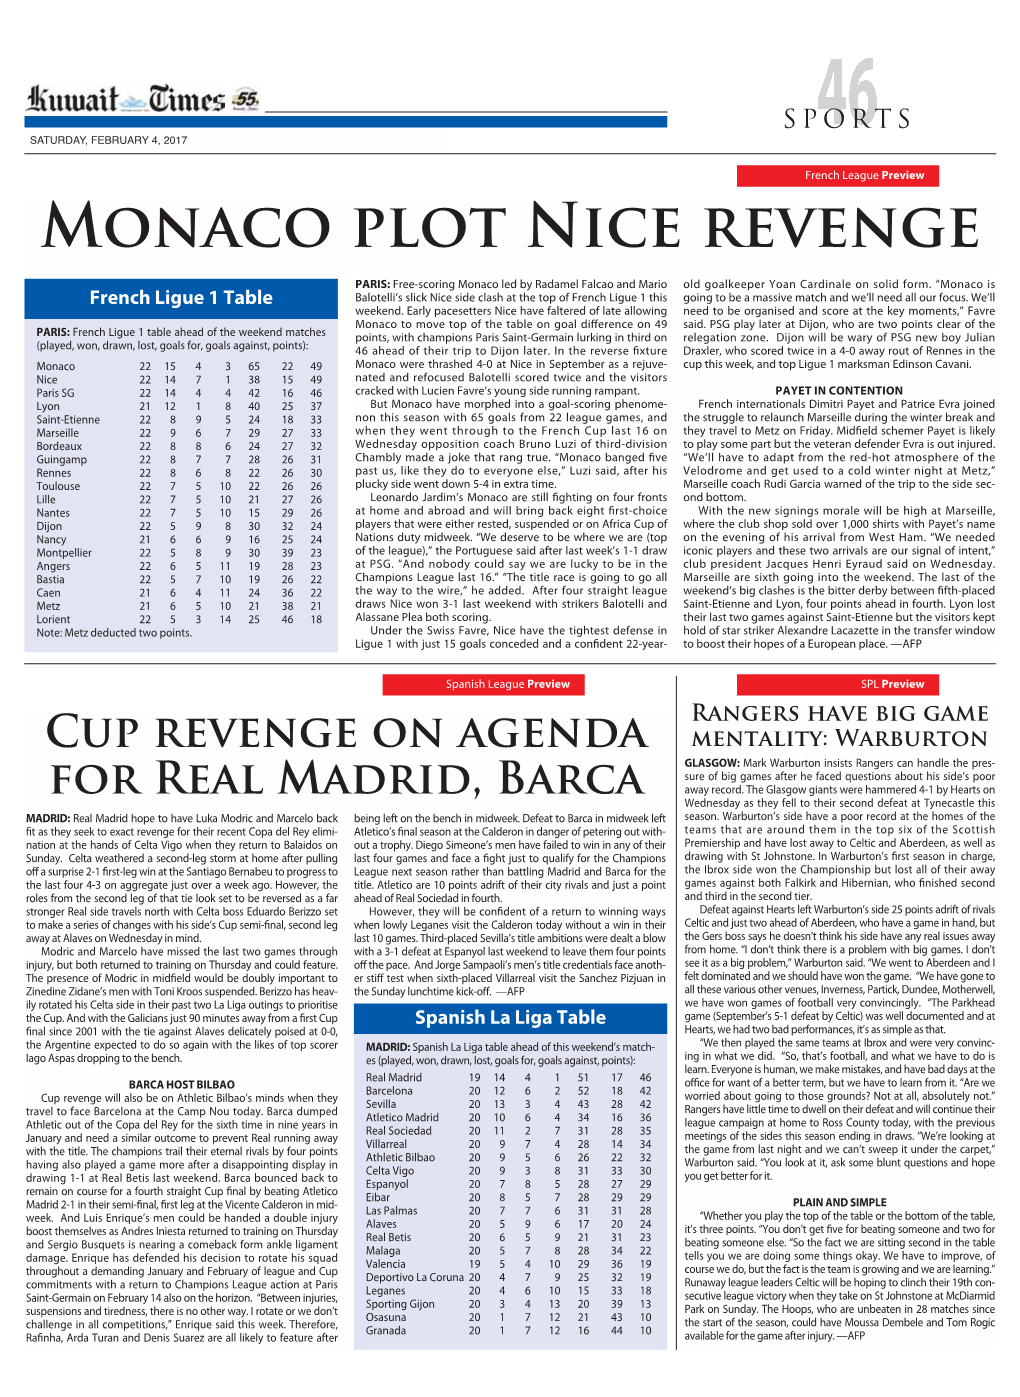 Monaco Plot Nice Revenge